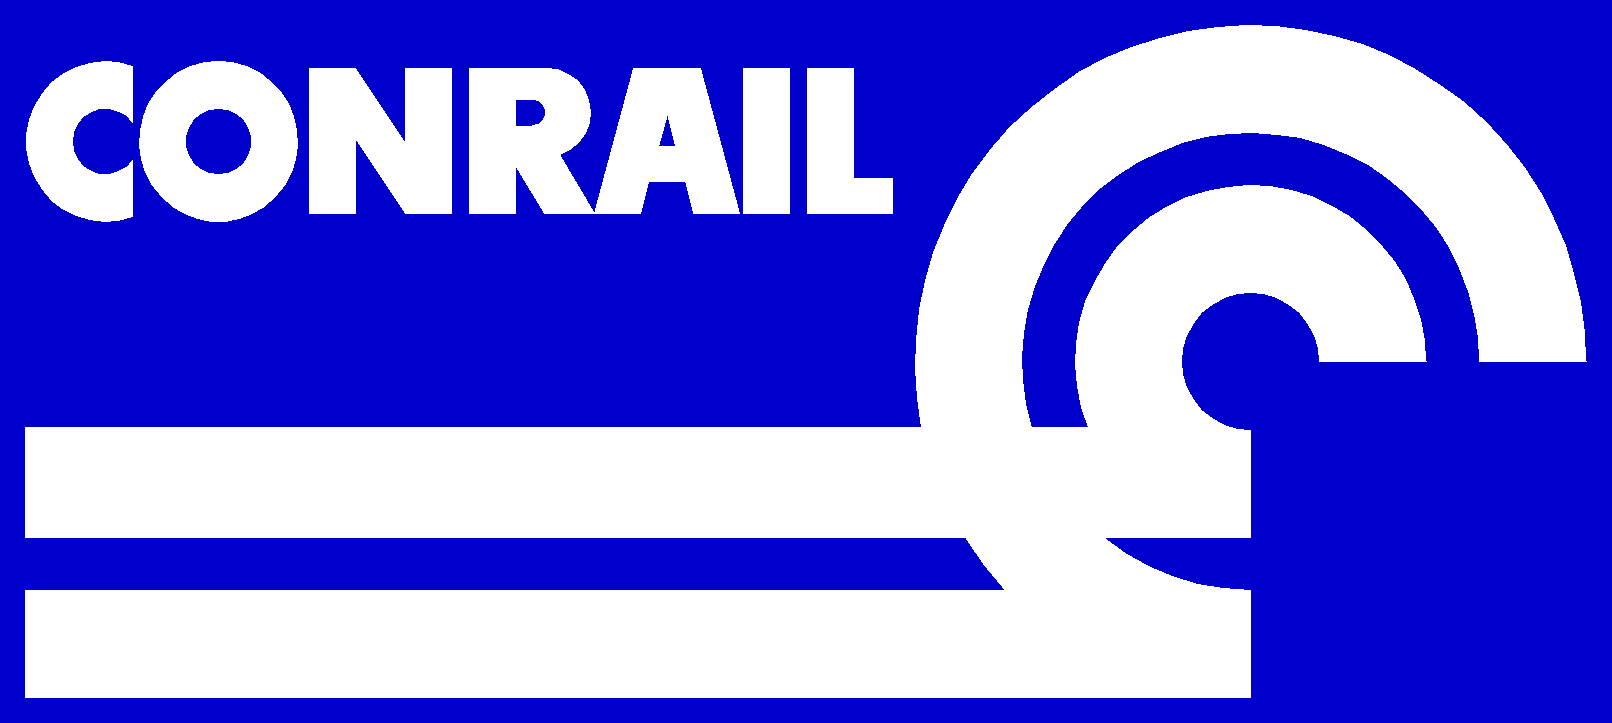 Conrail Logo - Conrail | Logopedia | FANDOM powered by Wikia